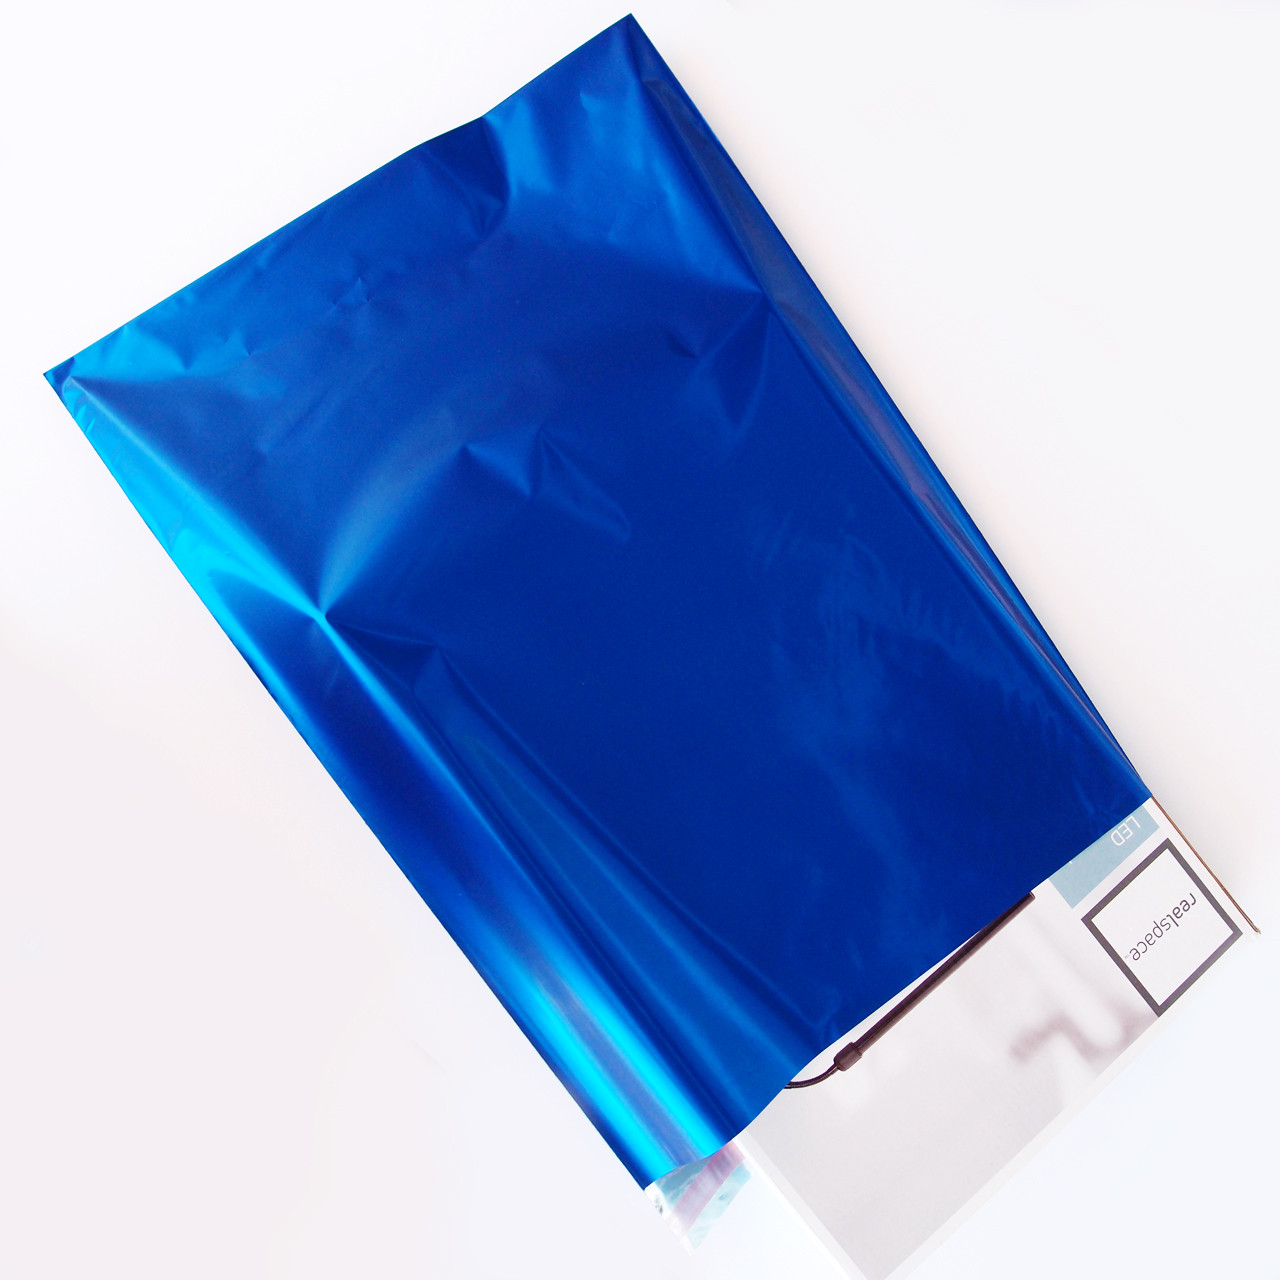 Adhesive Merchandise Bags 13 3/4" x 19" Royal Blue